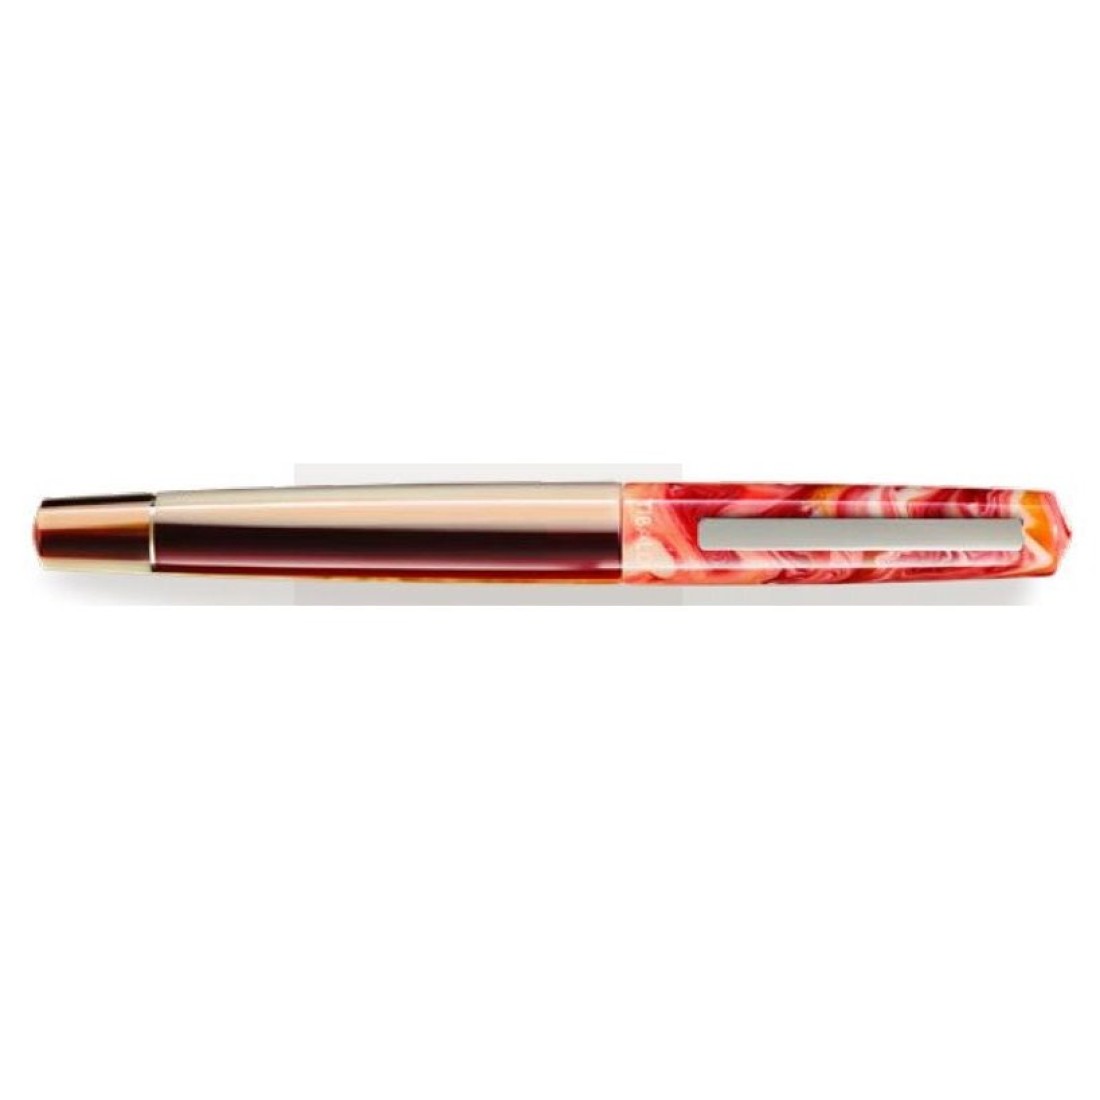 Tibaldi Infrangibile Russet Red Fountain pen